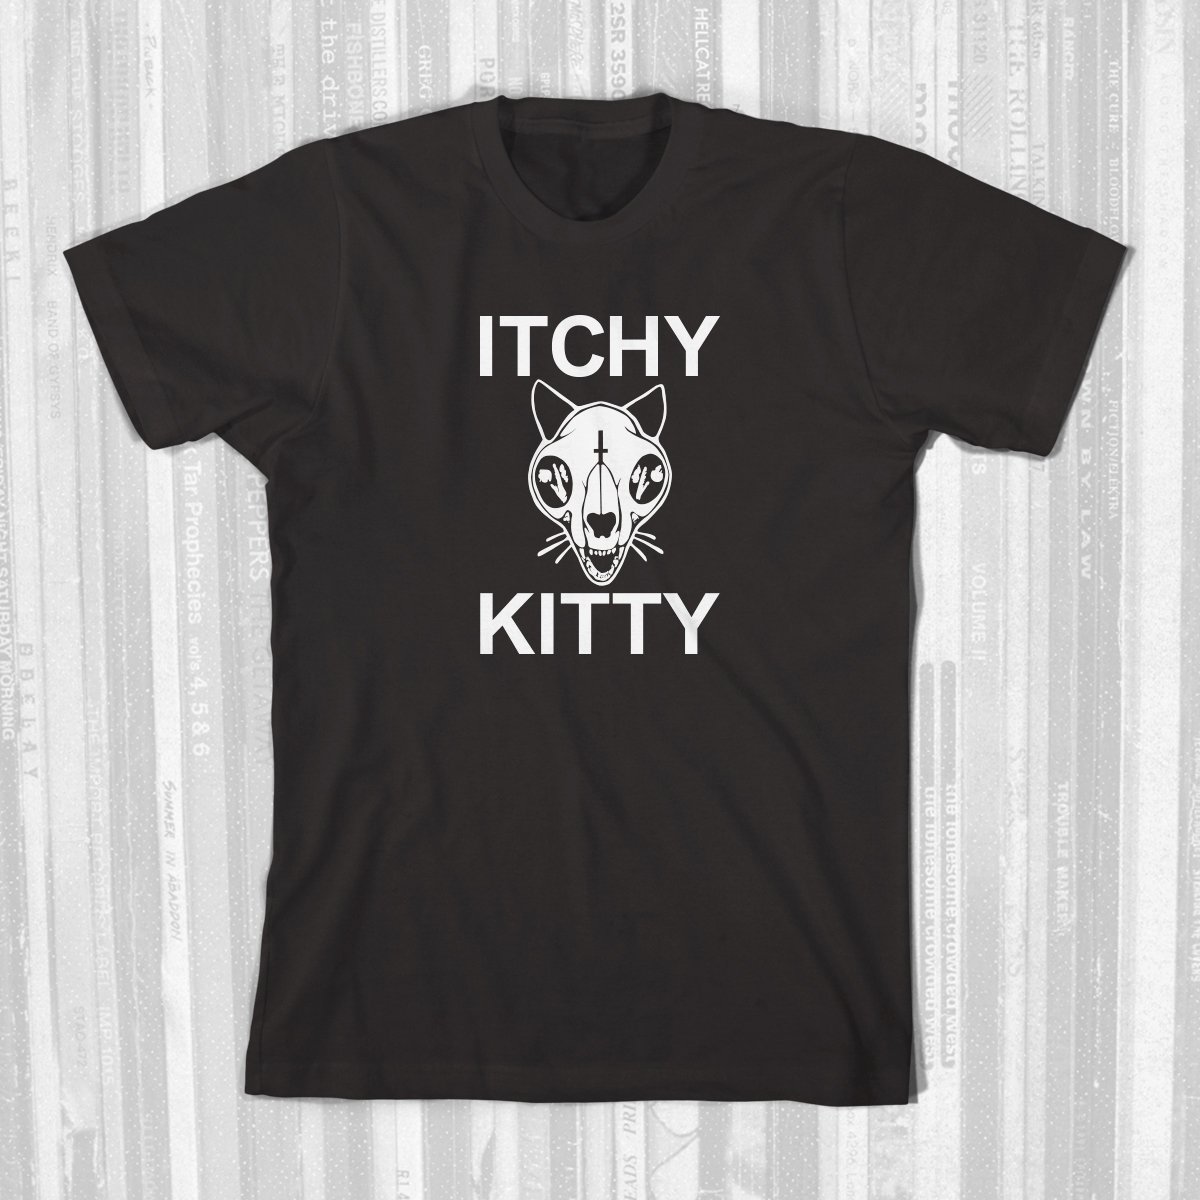 Itchy Kitty: Kitty 1 Tee